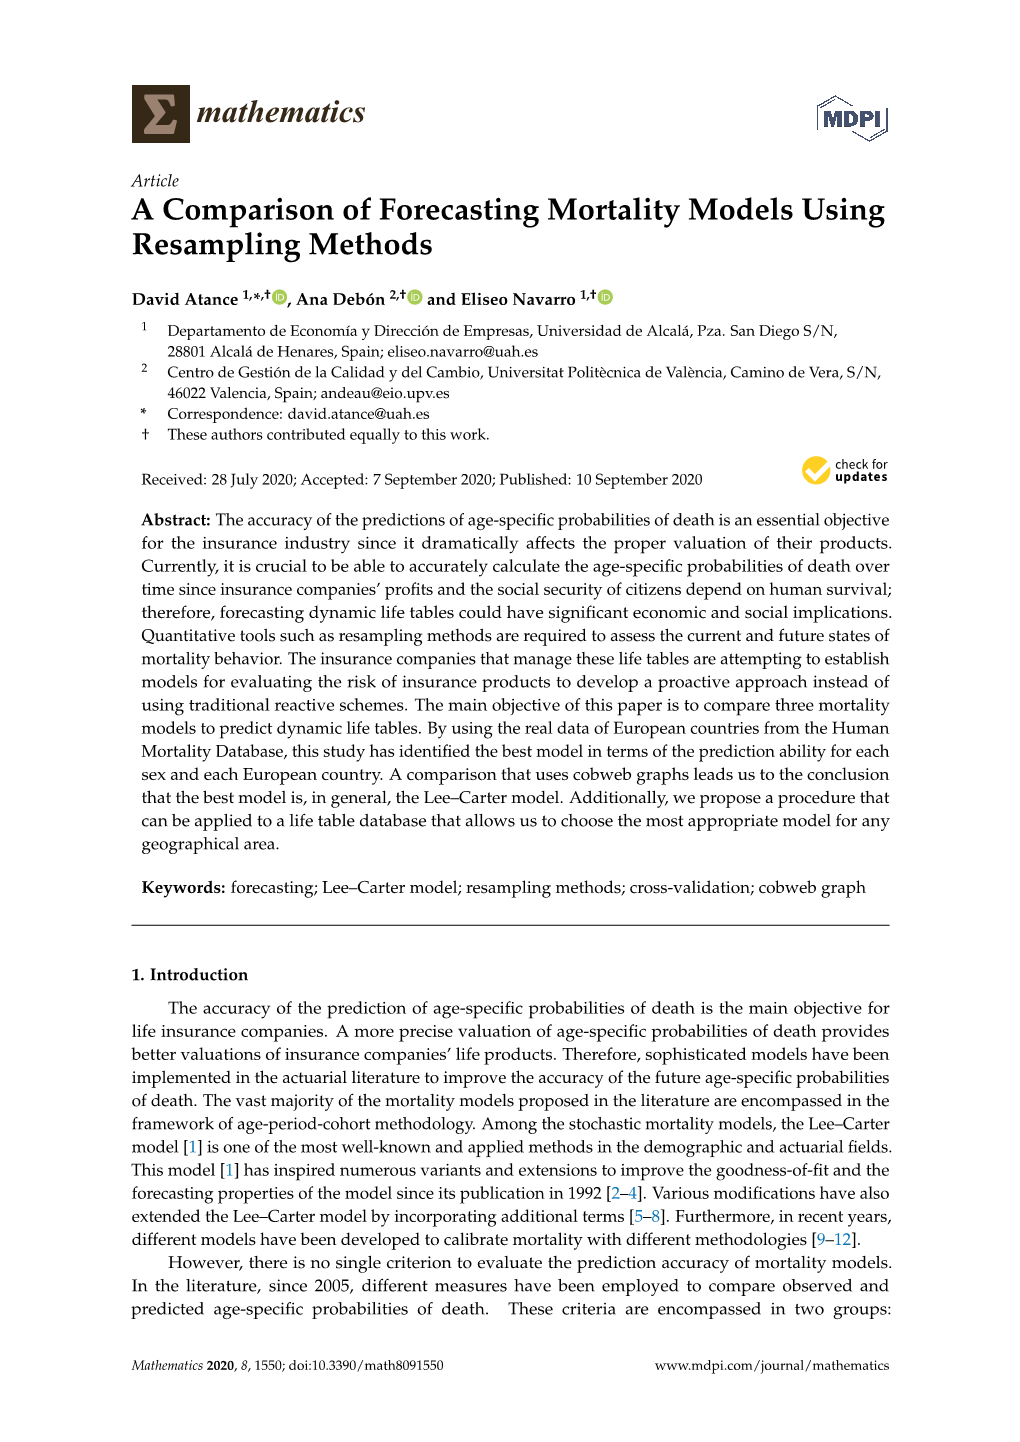 A Comparison of Forecasting Mortality Models Using Resampling Methods